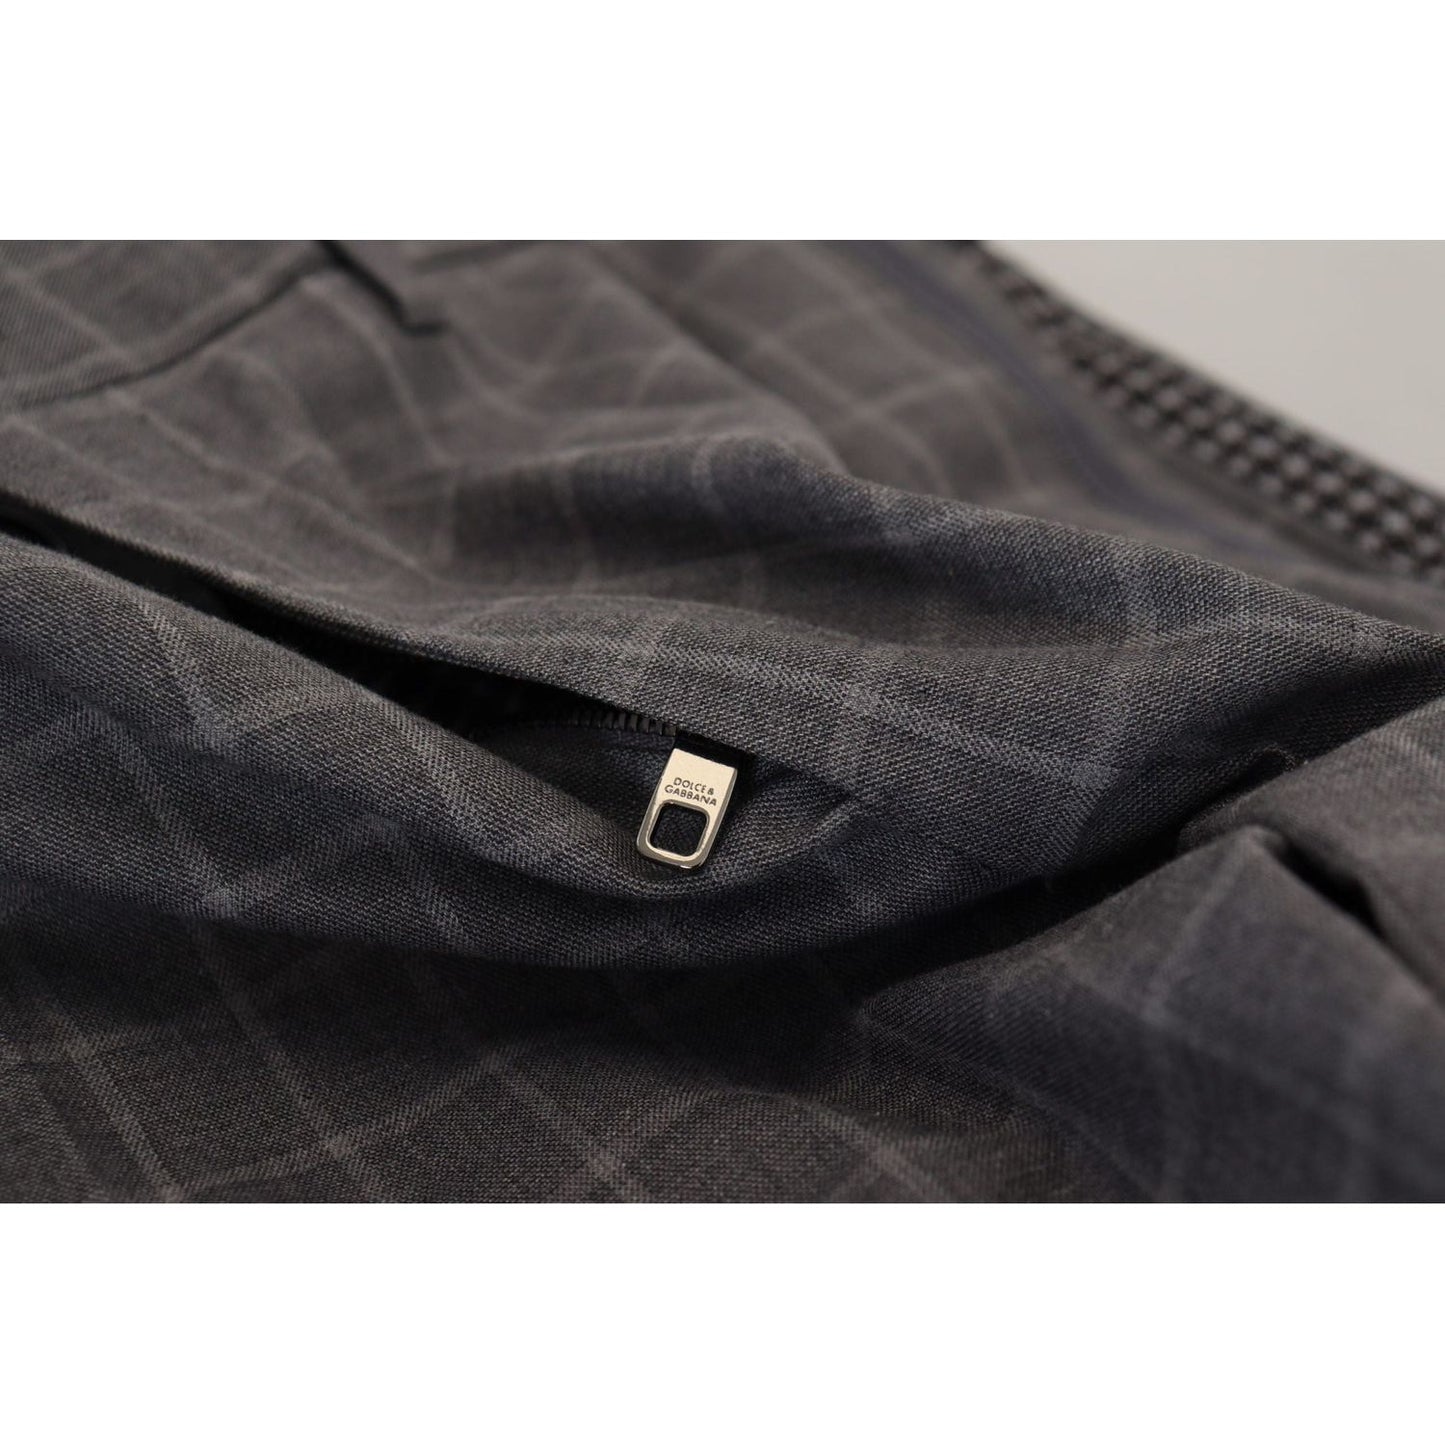 Dolce & Gabbana Grey Cotton Checkered Chino Pants grey-cotton-checkered-chino-pants